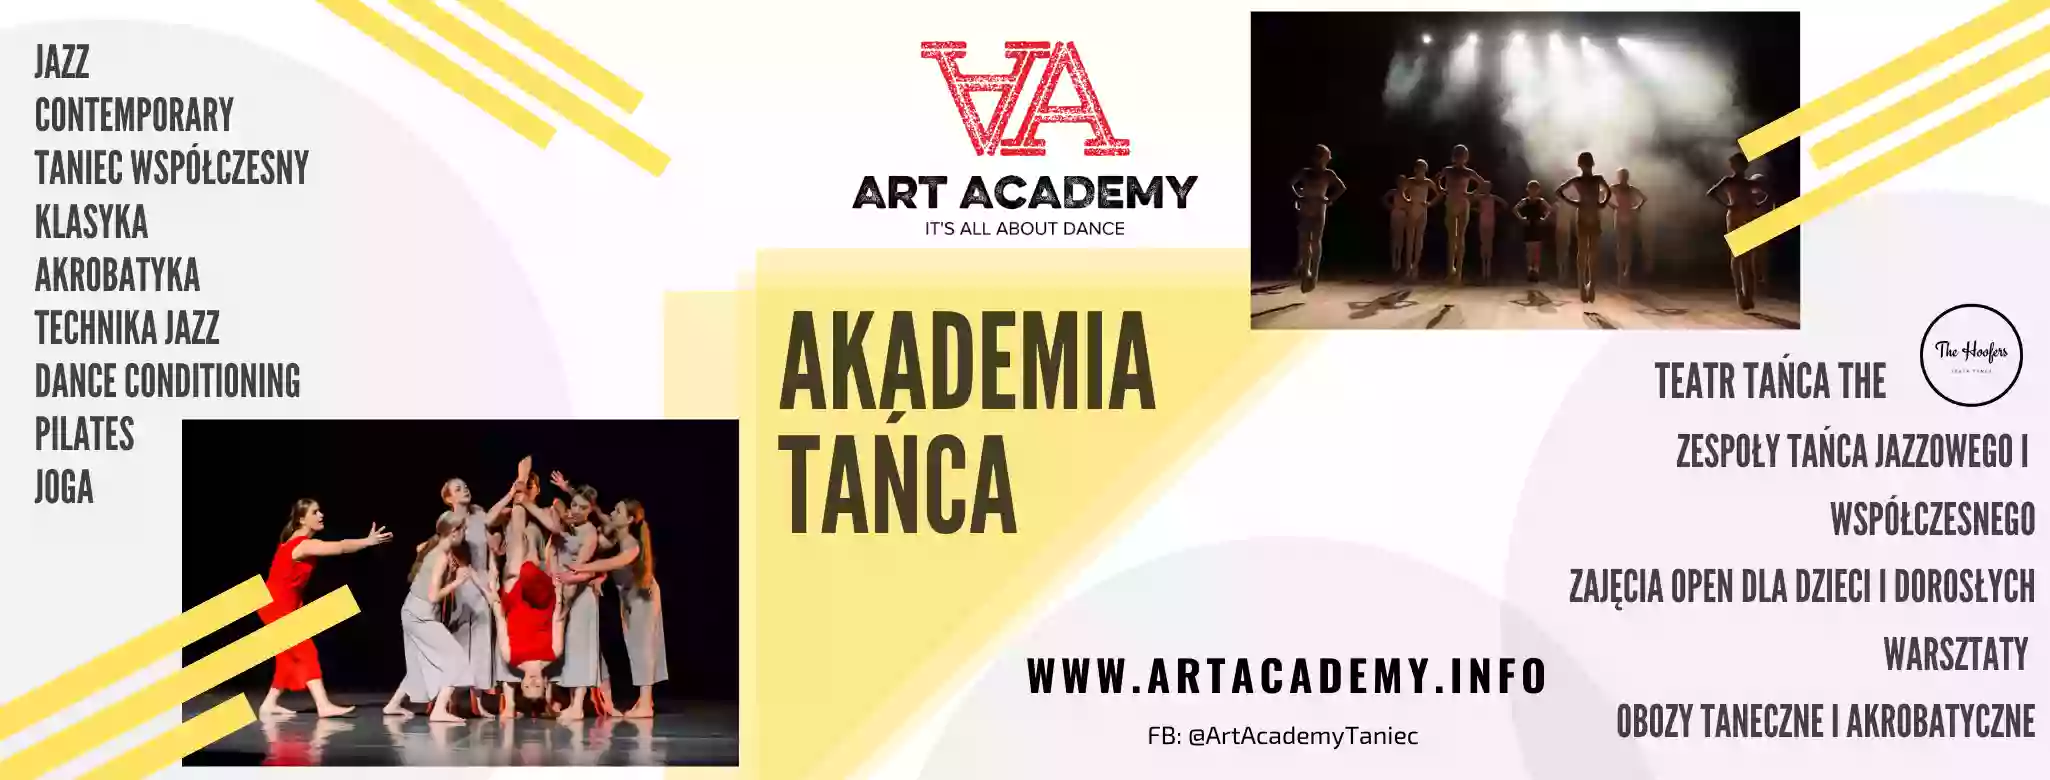 Art Academy - Akademia Tańca Katowice